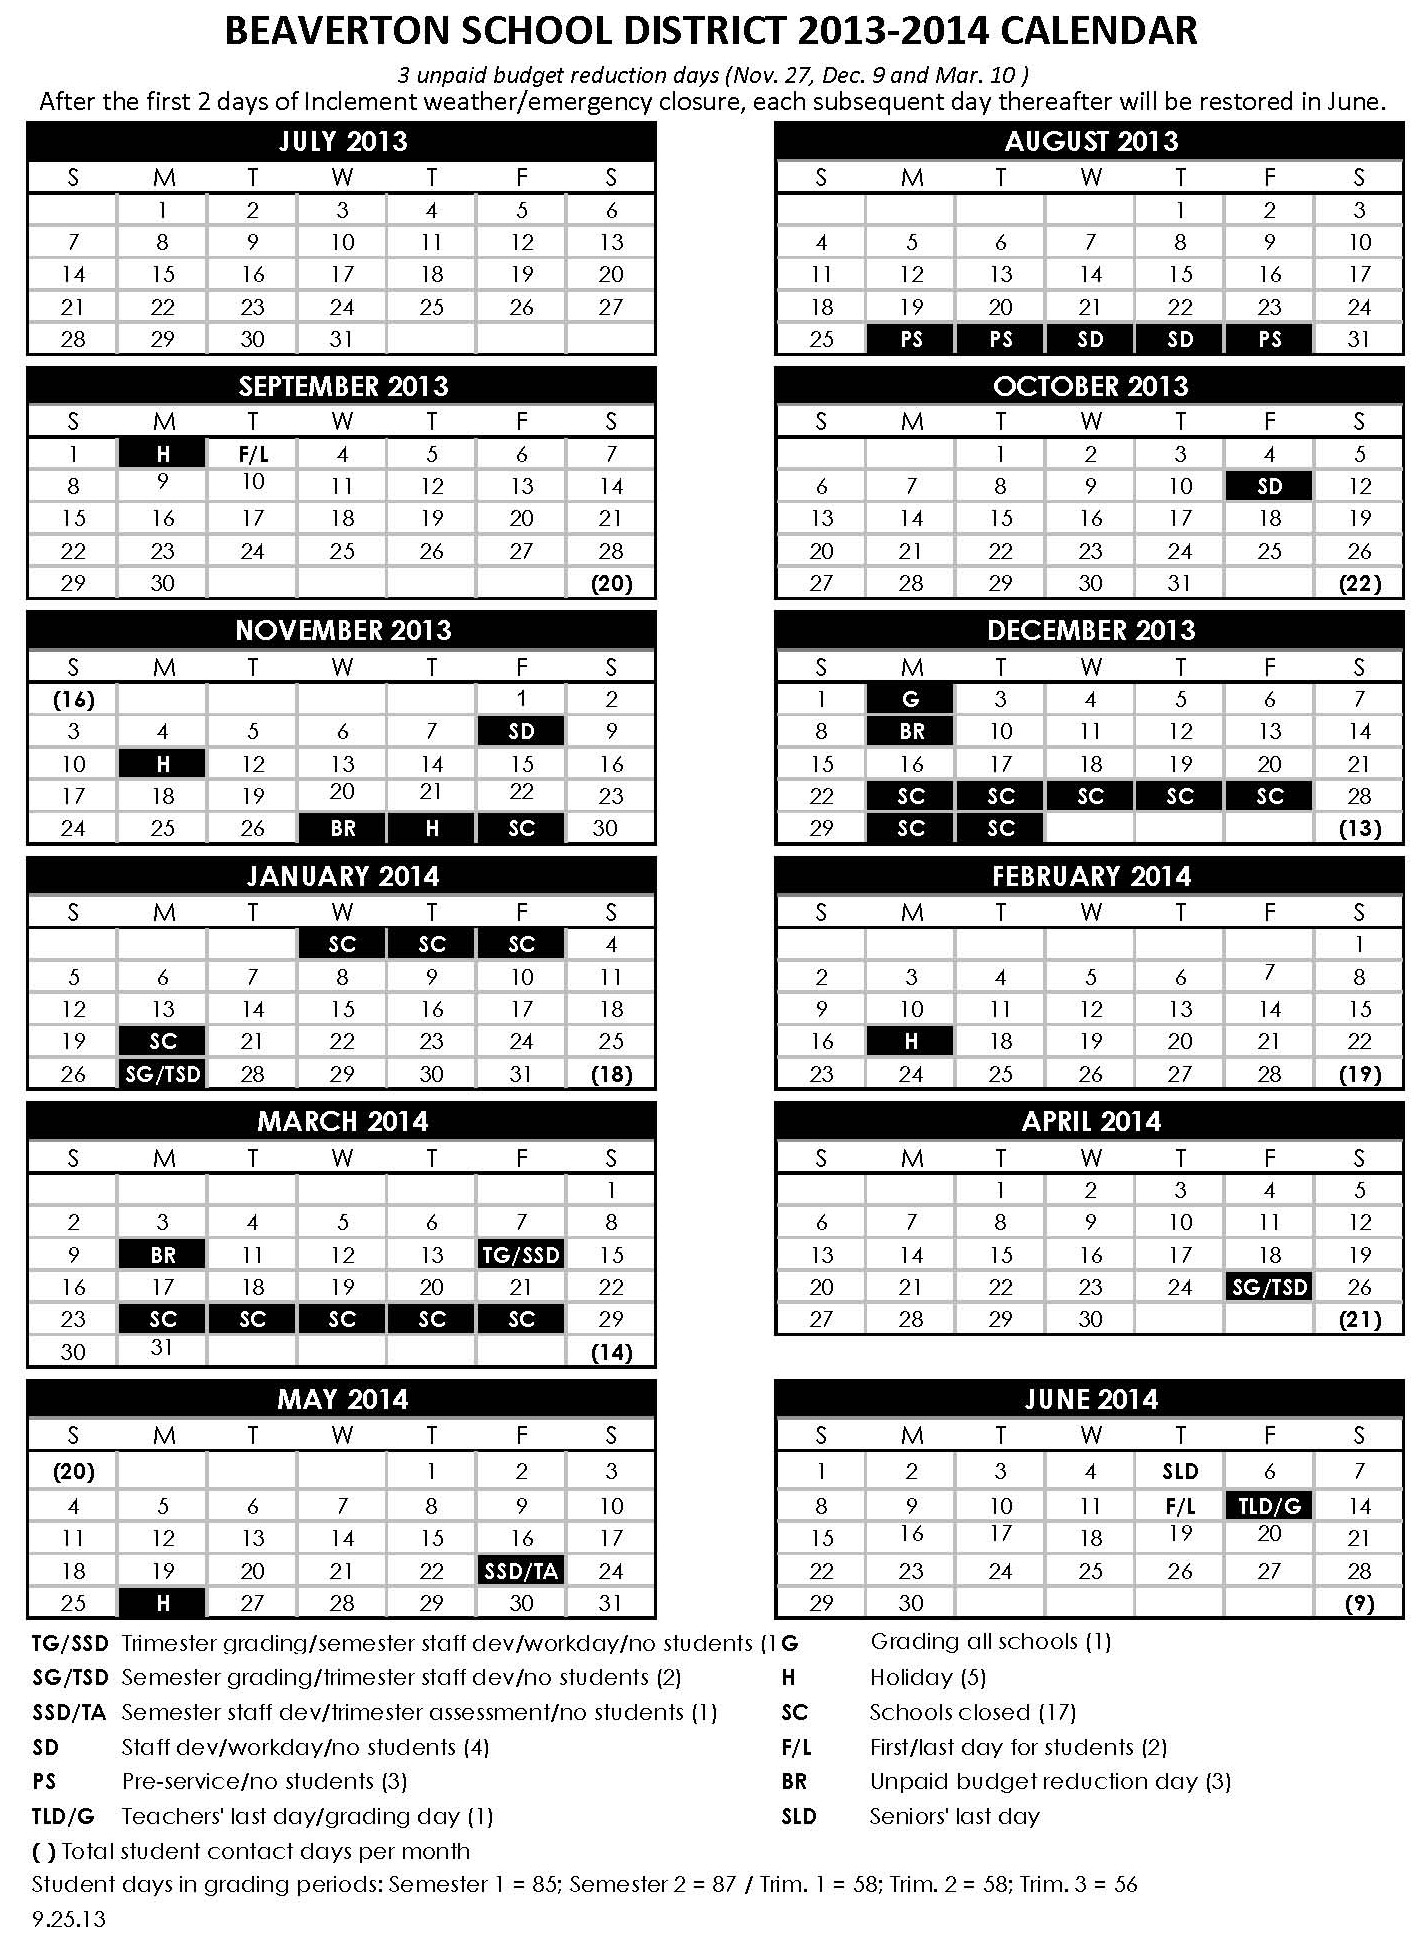 beaverton-school-district-calendar-qualads